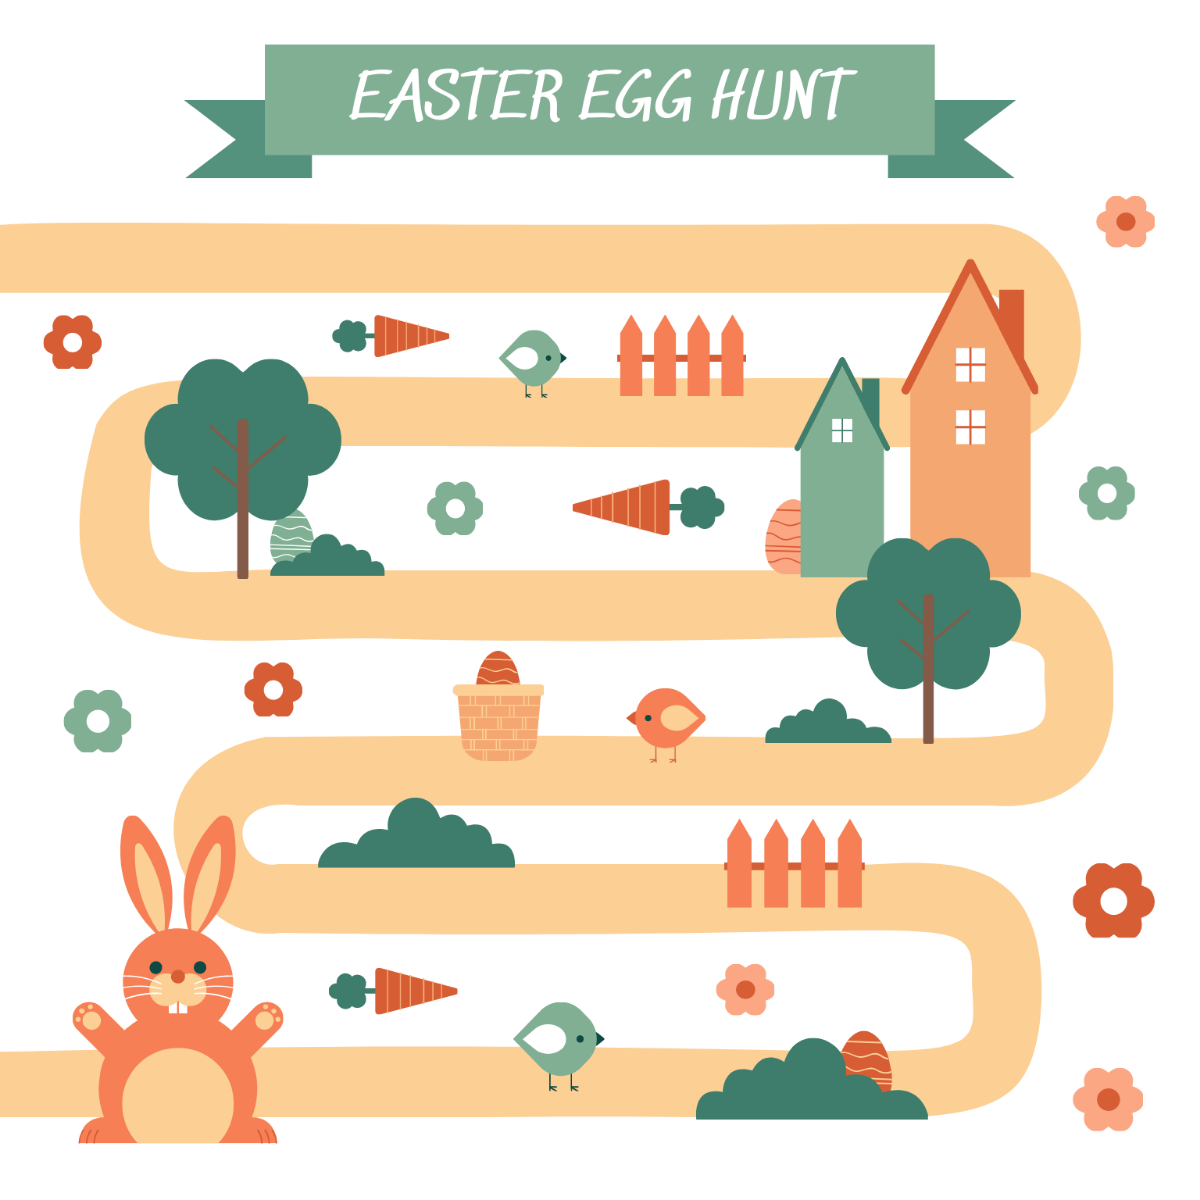 Free Easter Egg Hunt Image Template